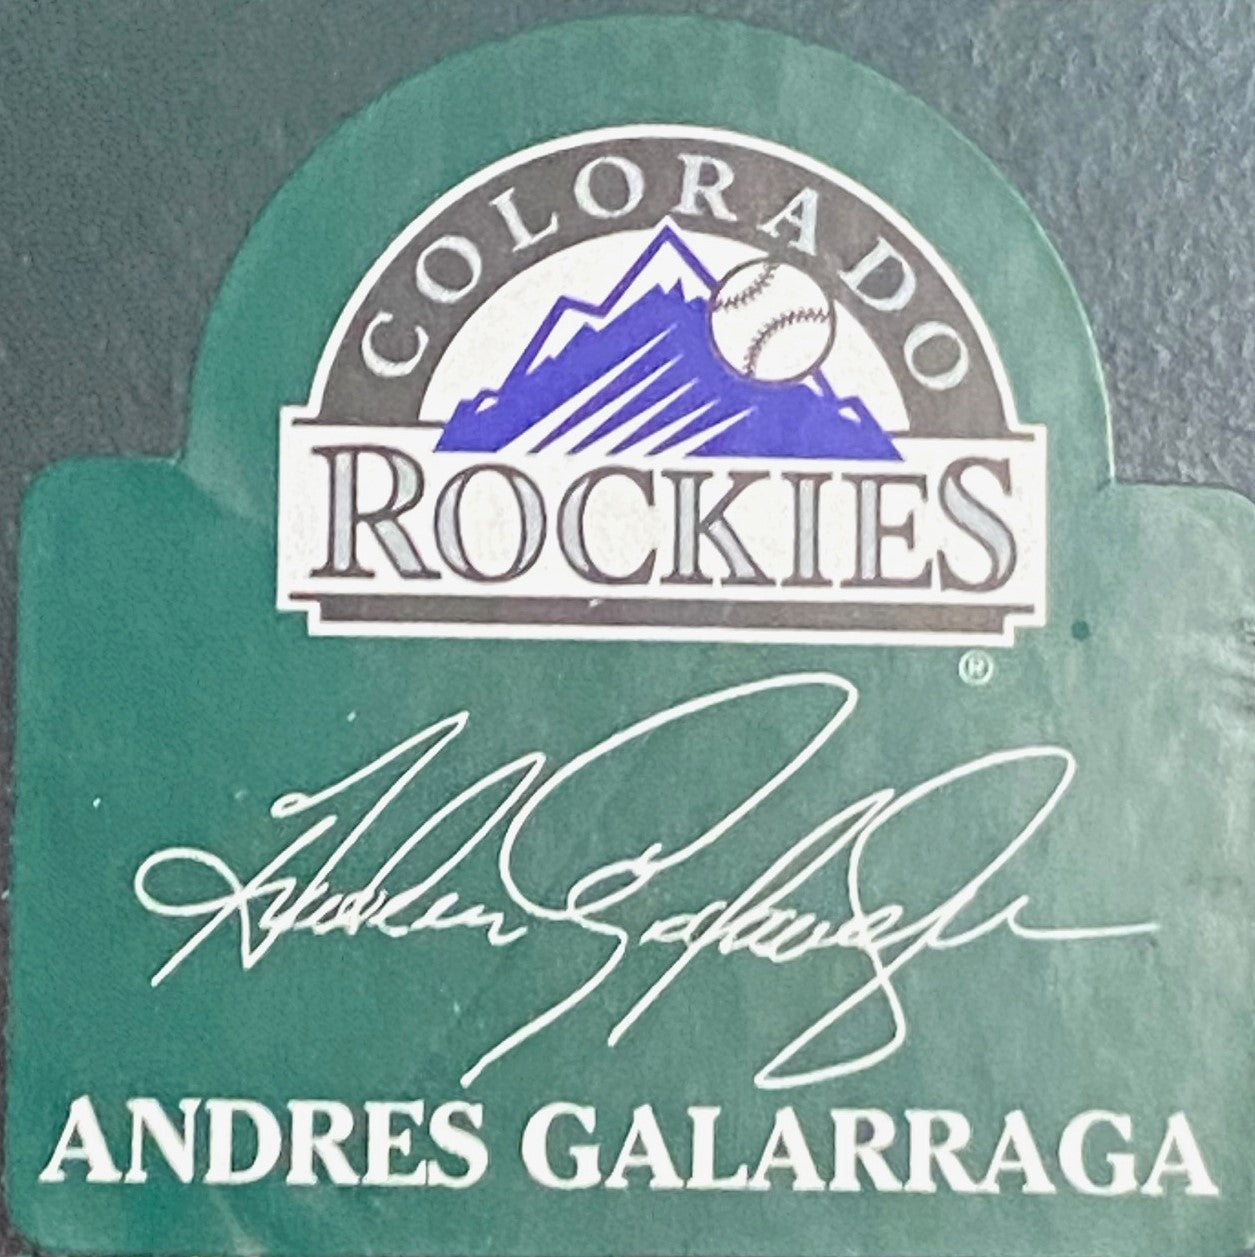 Andres Galarraga 1996 MLB Colorado Rockies Headliner Figurine (New) by Corinthian